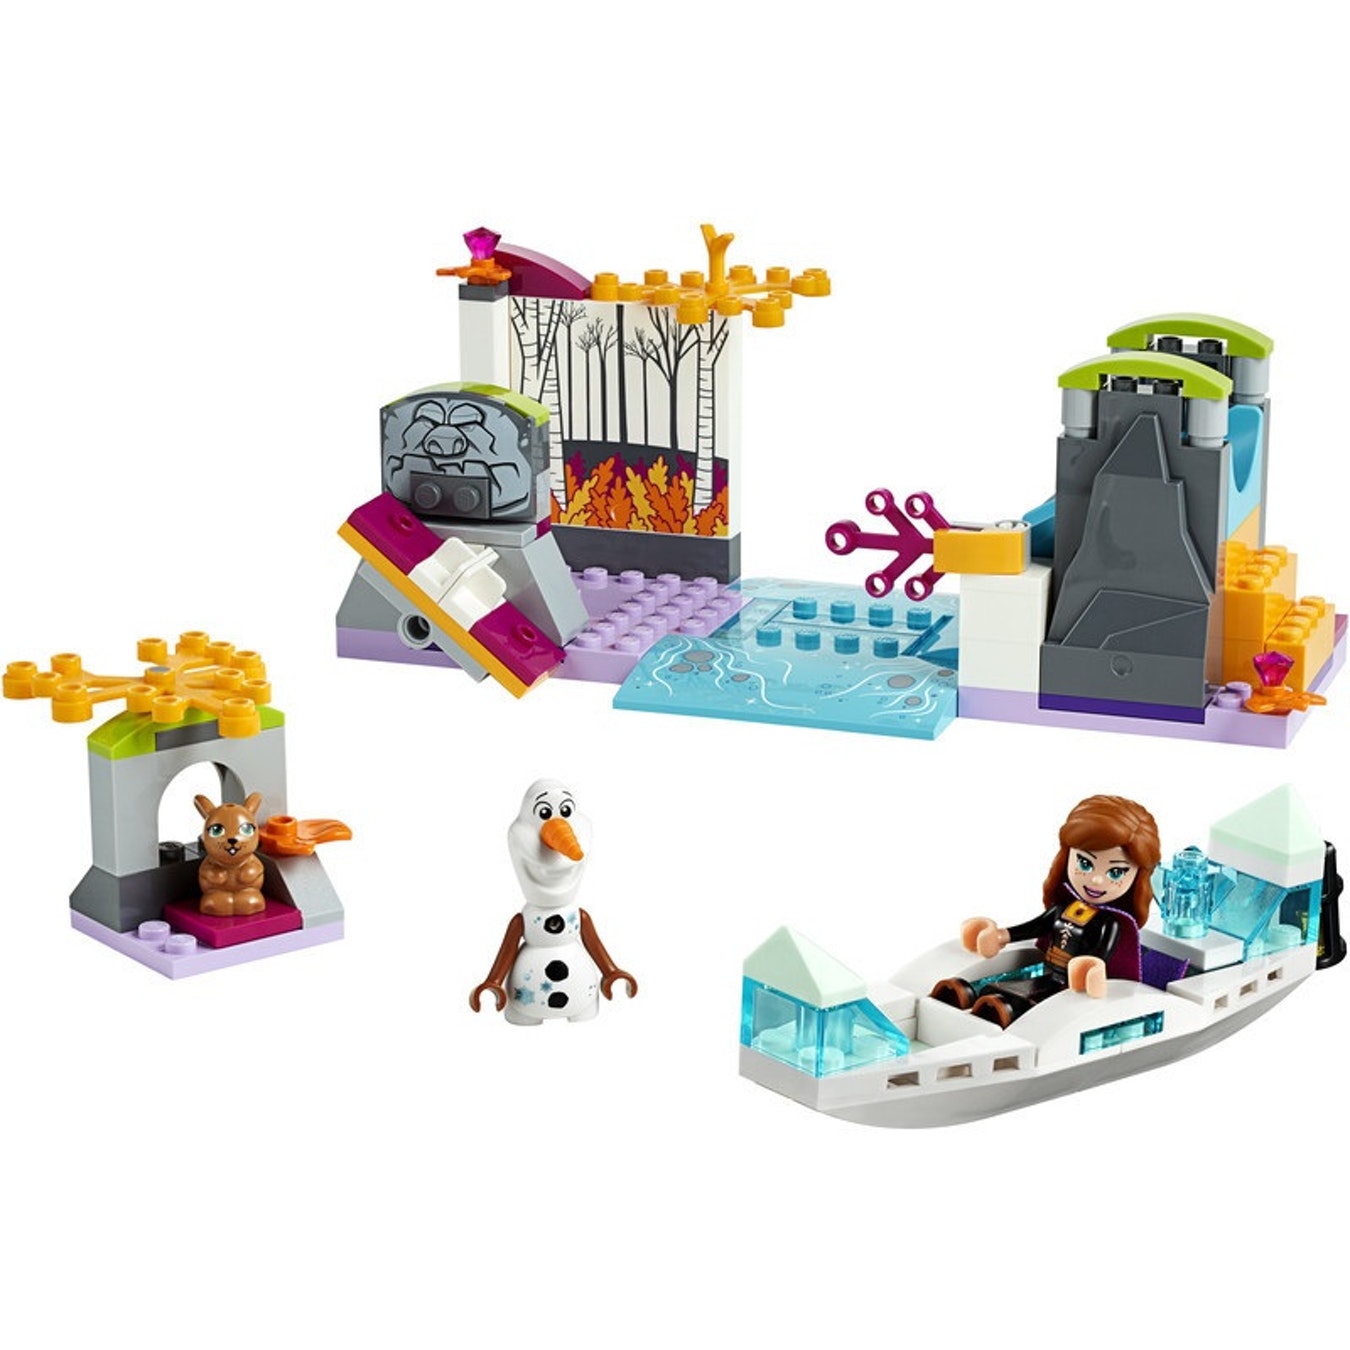 LEGO - Disney Frozen - Annas Kanufahrt (41165)